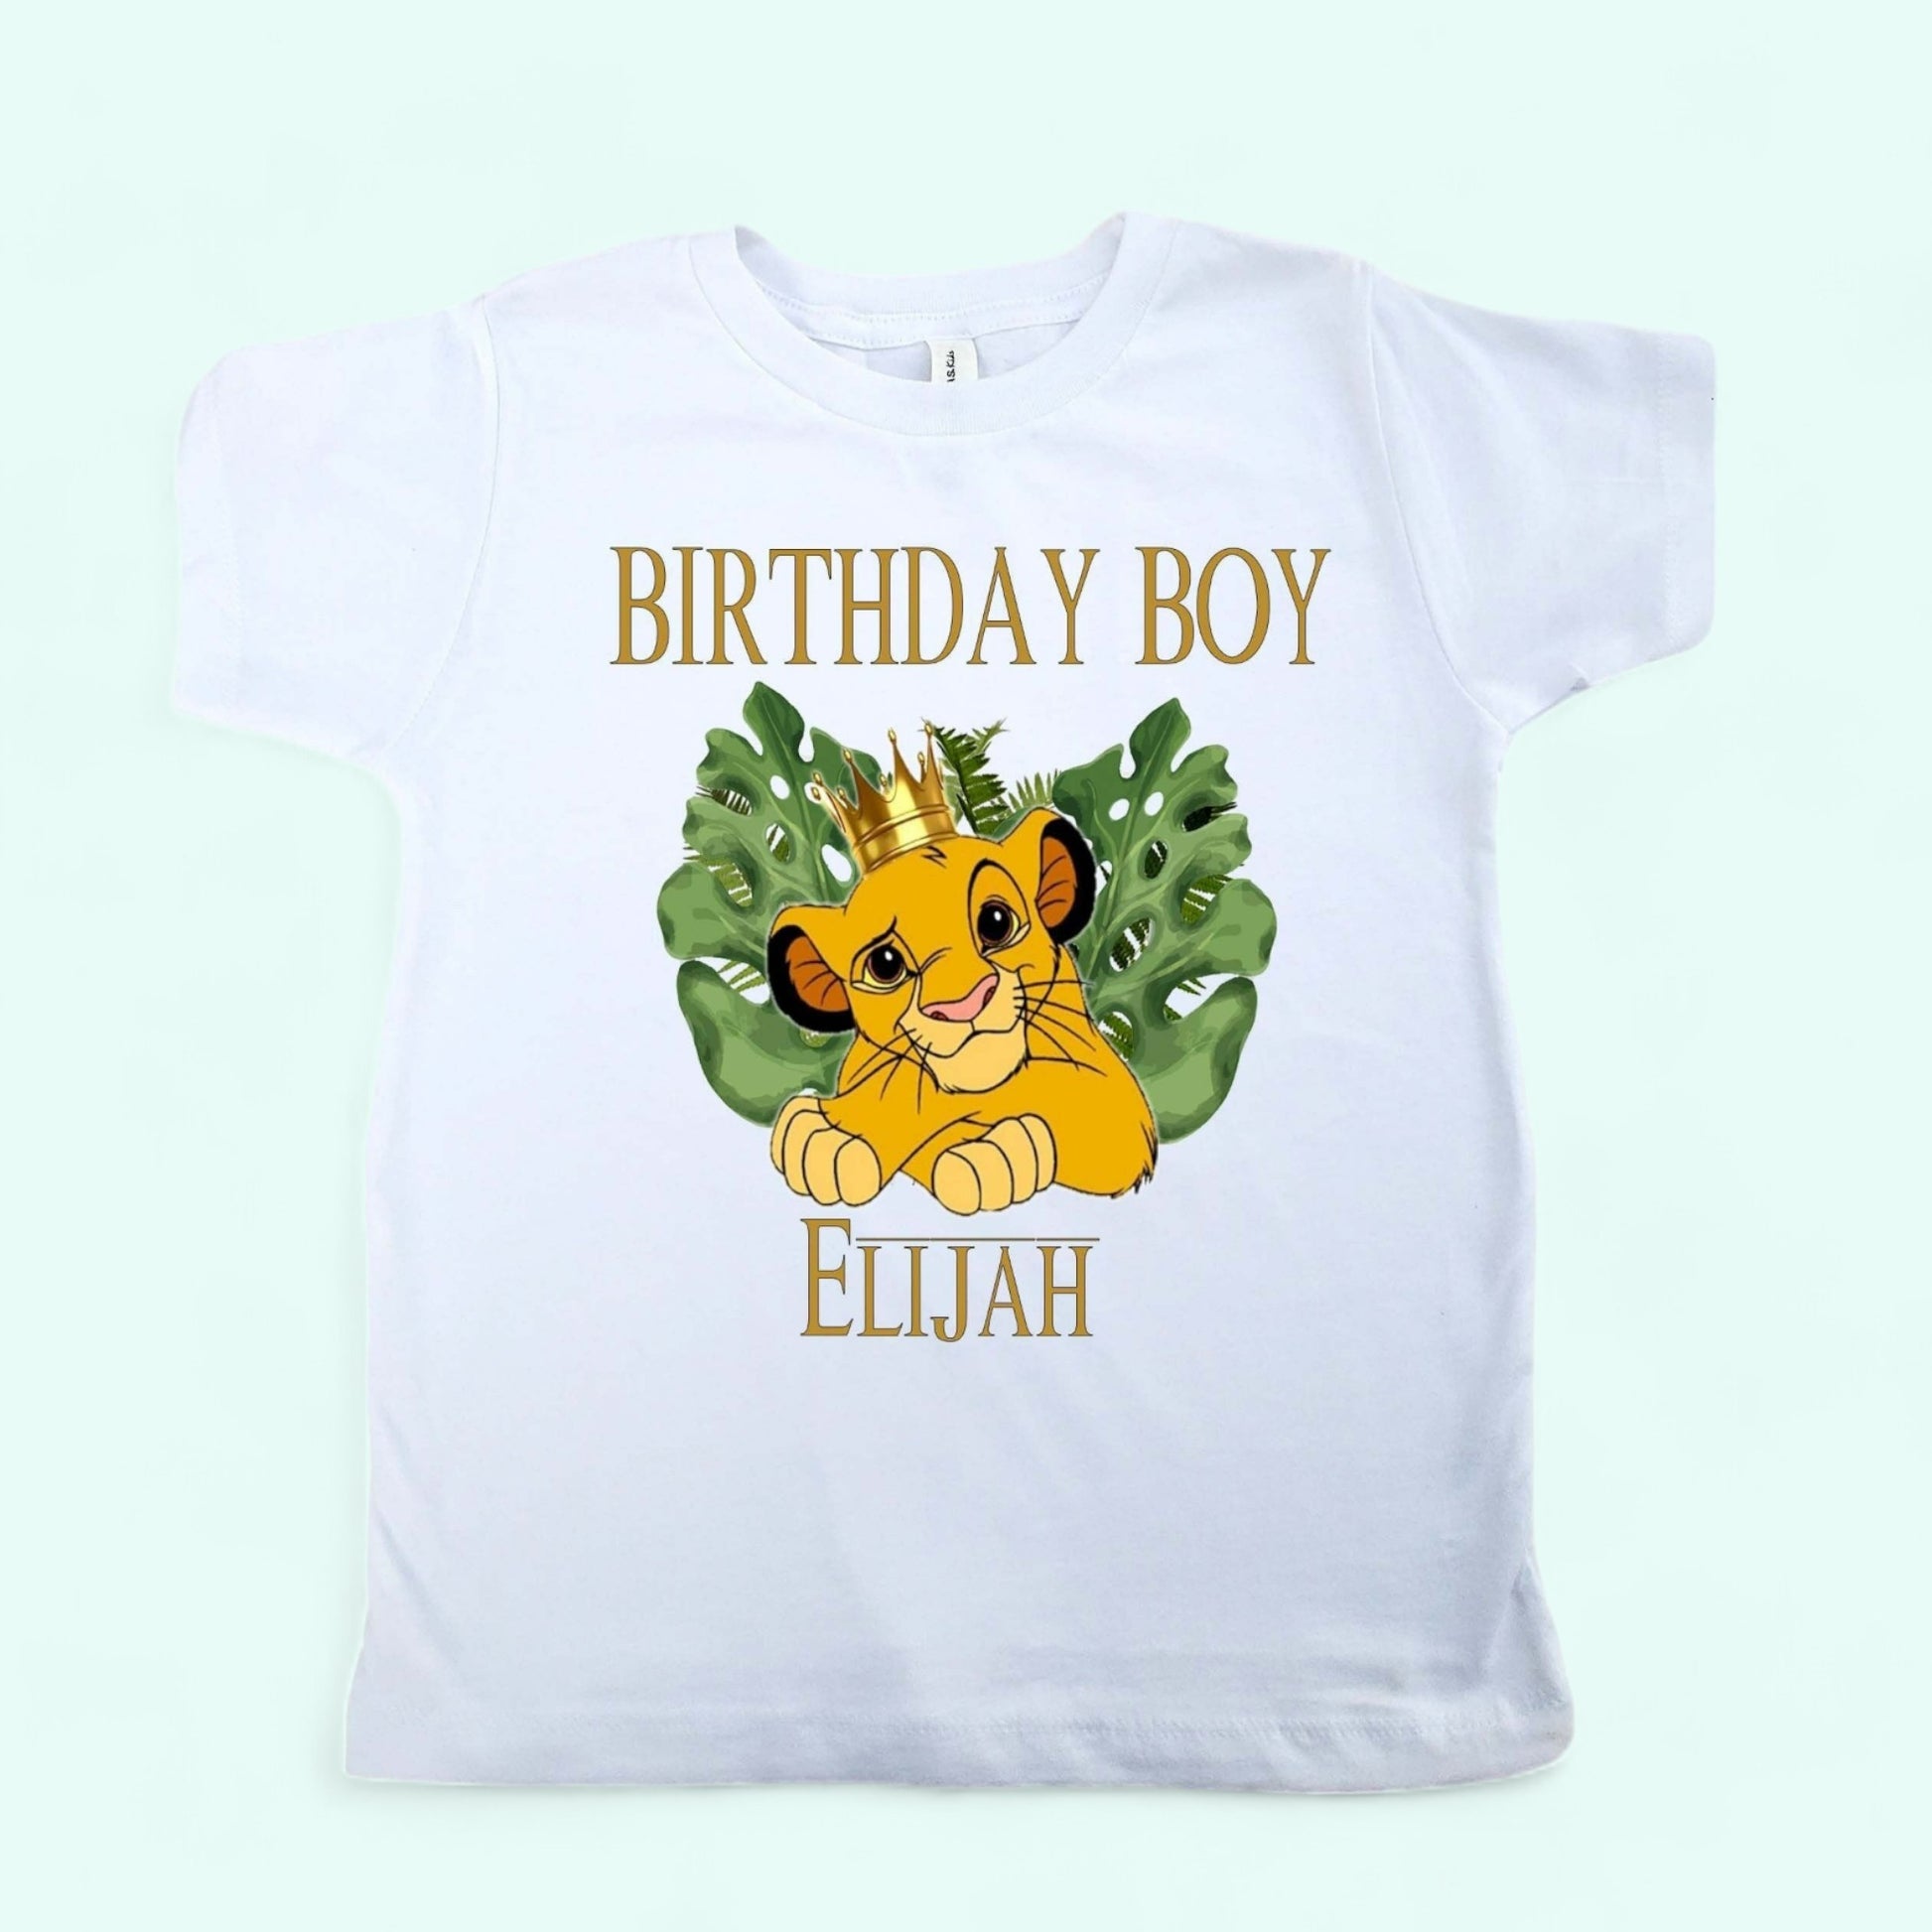 Lion King birthday shirt